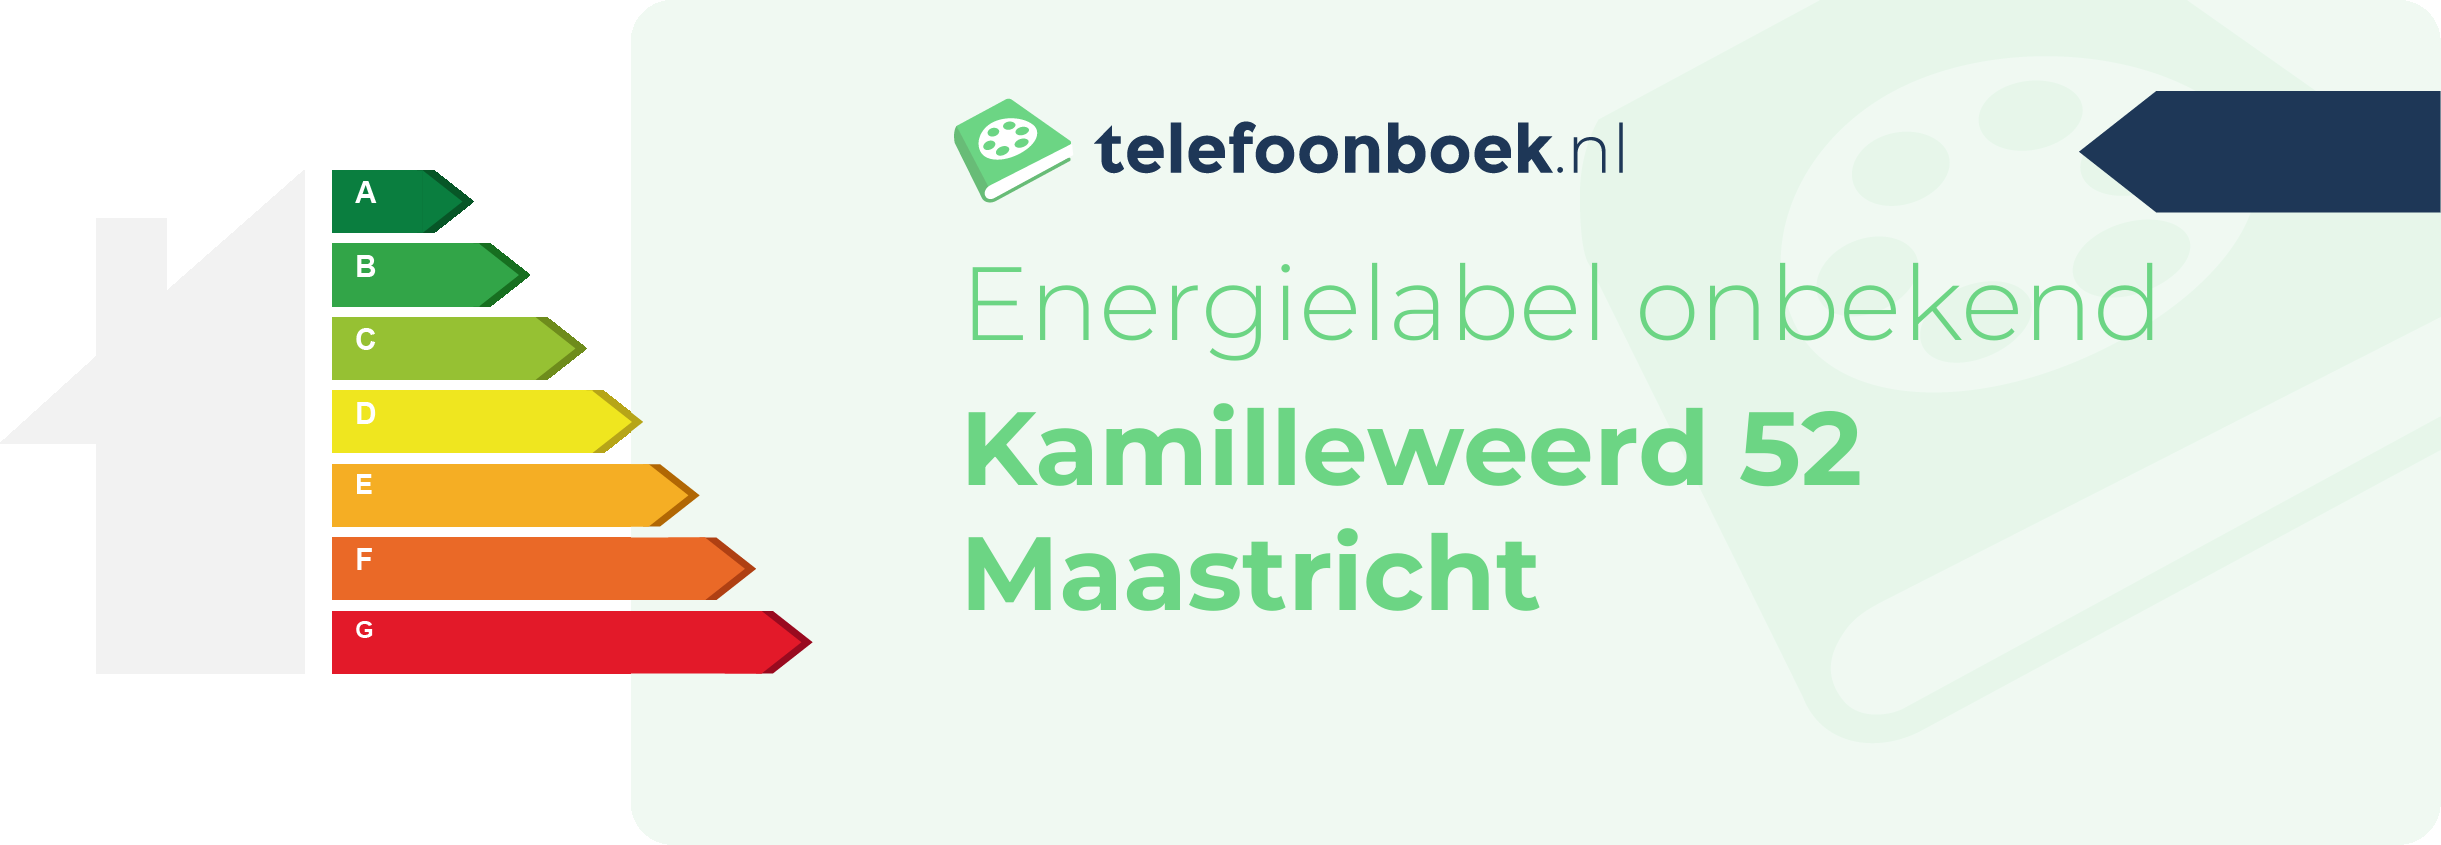 Energielabel Kamilleweerd 52 Maastricht